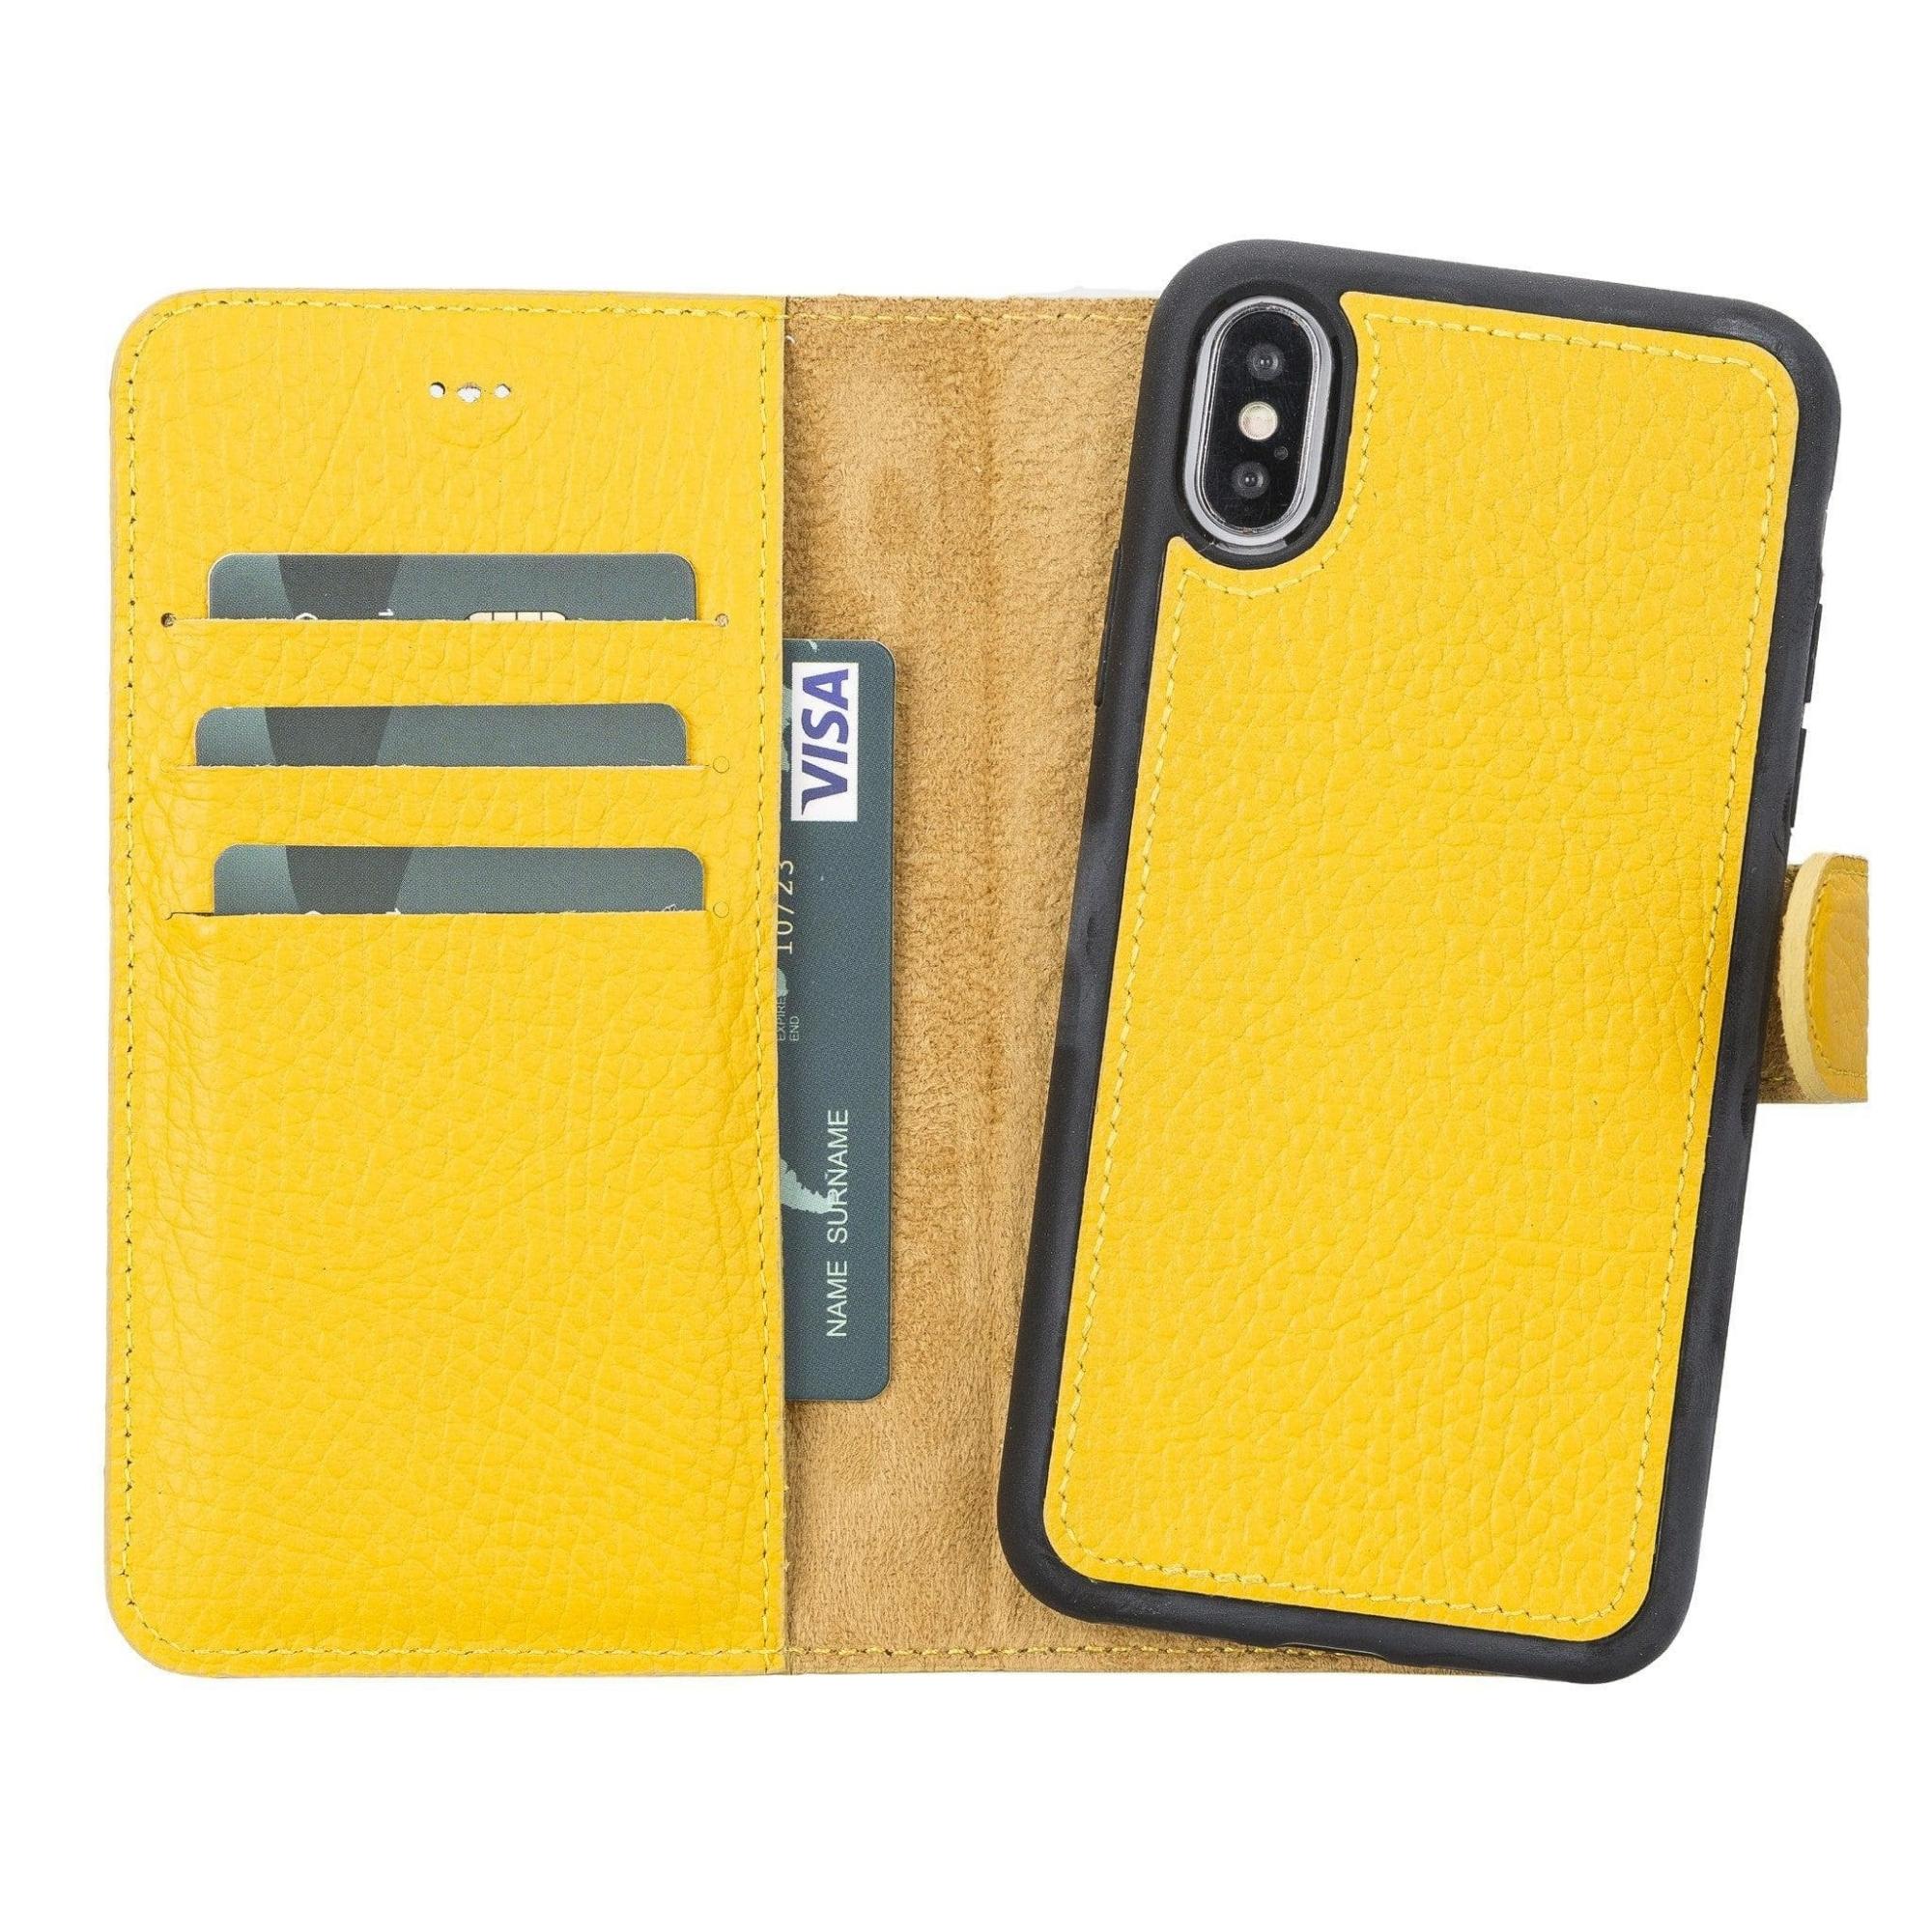 Casper iPhone XR Leather Wallet Case-iPhone XR-Yellow--TORONATA